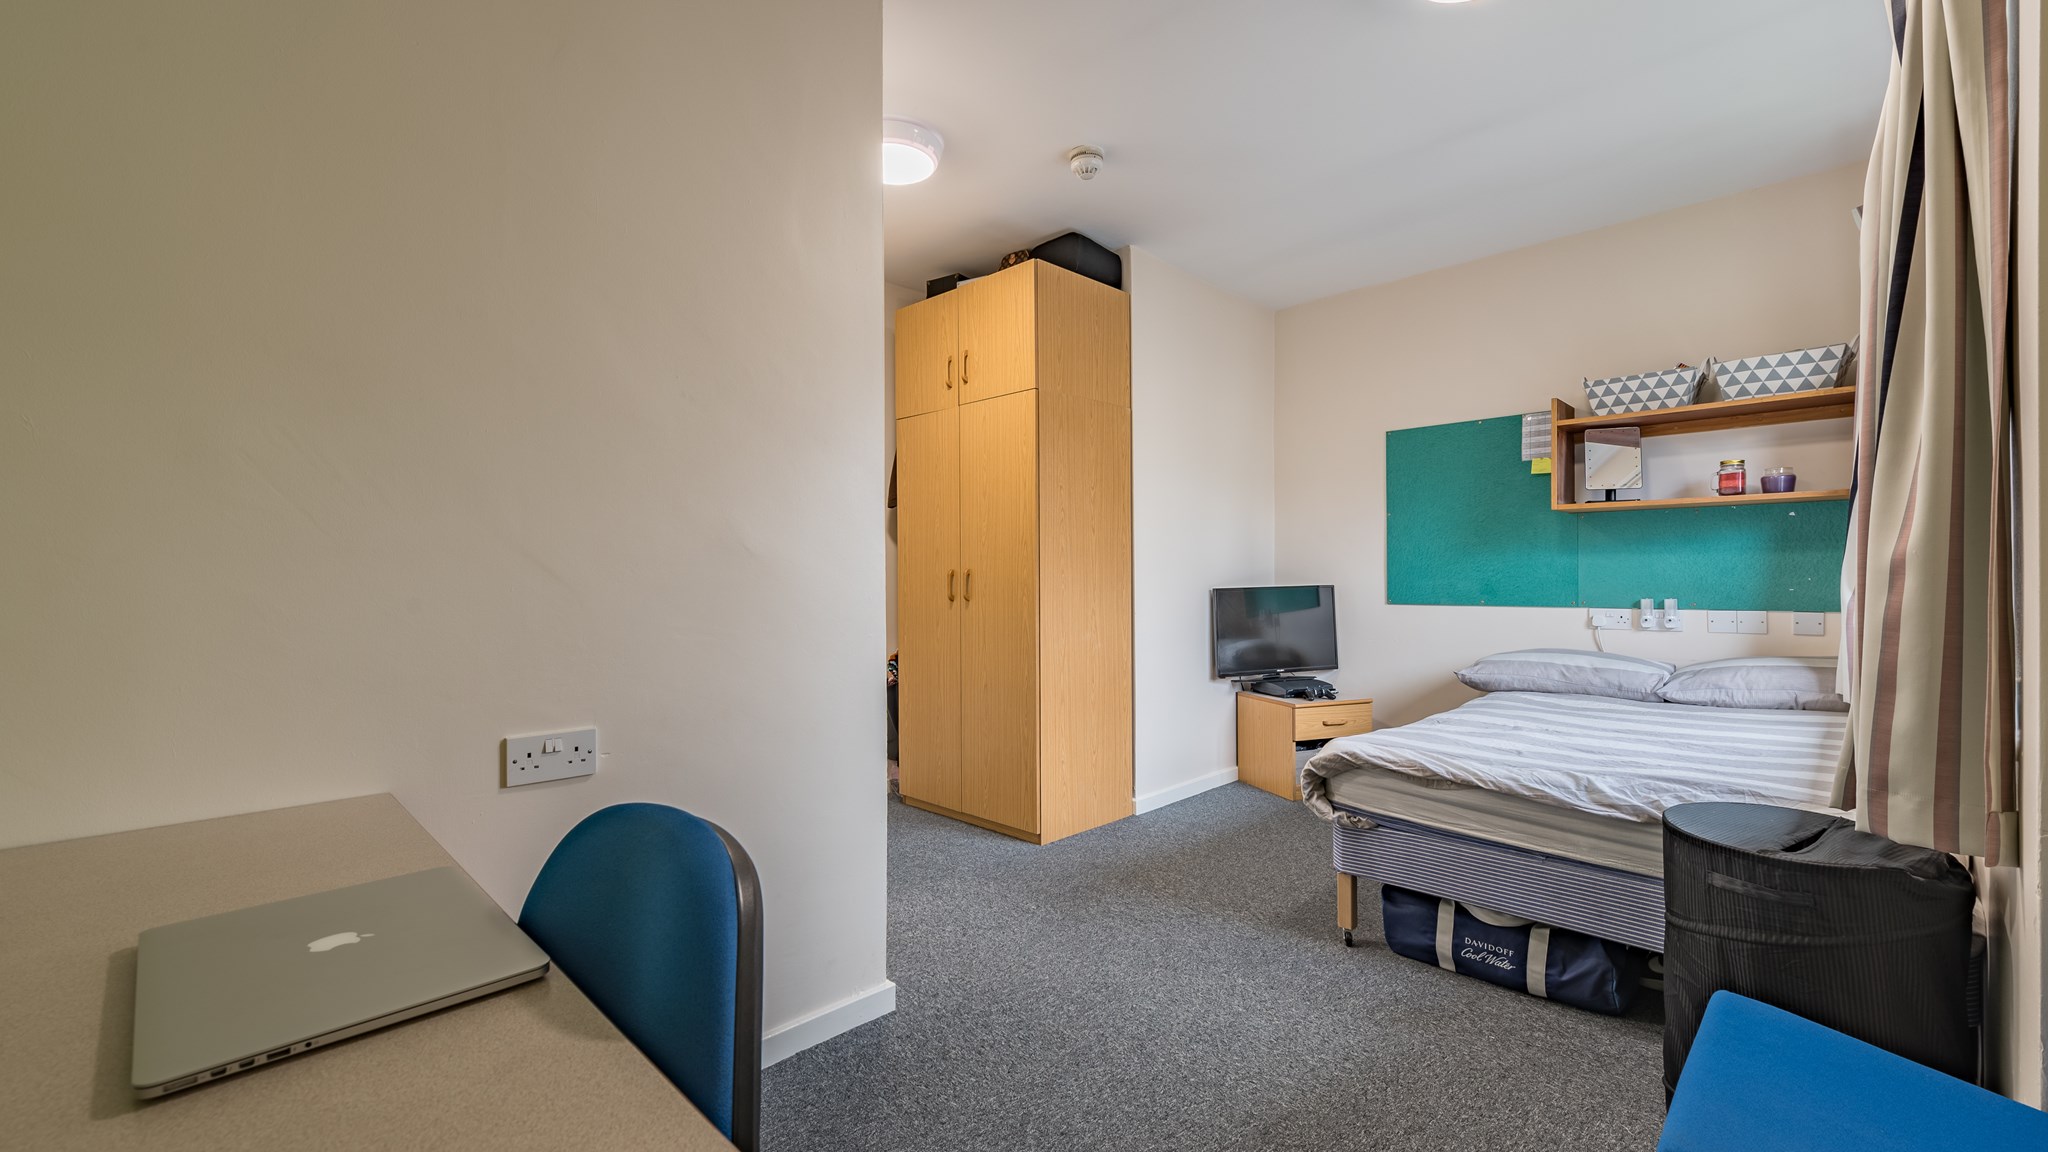 Doris Birdsall Halls, 5 bed En-Suite flat, Easby Road, City Centre, BD7 4